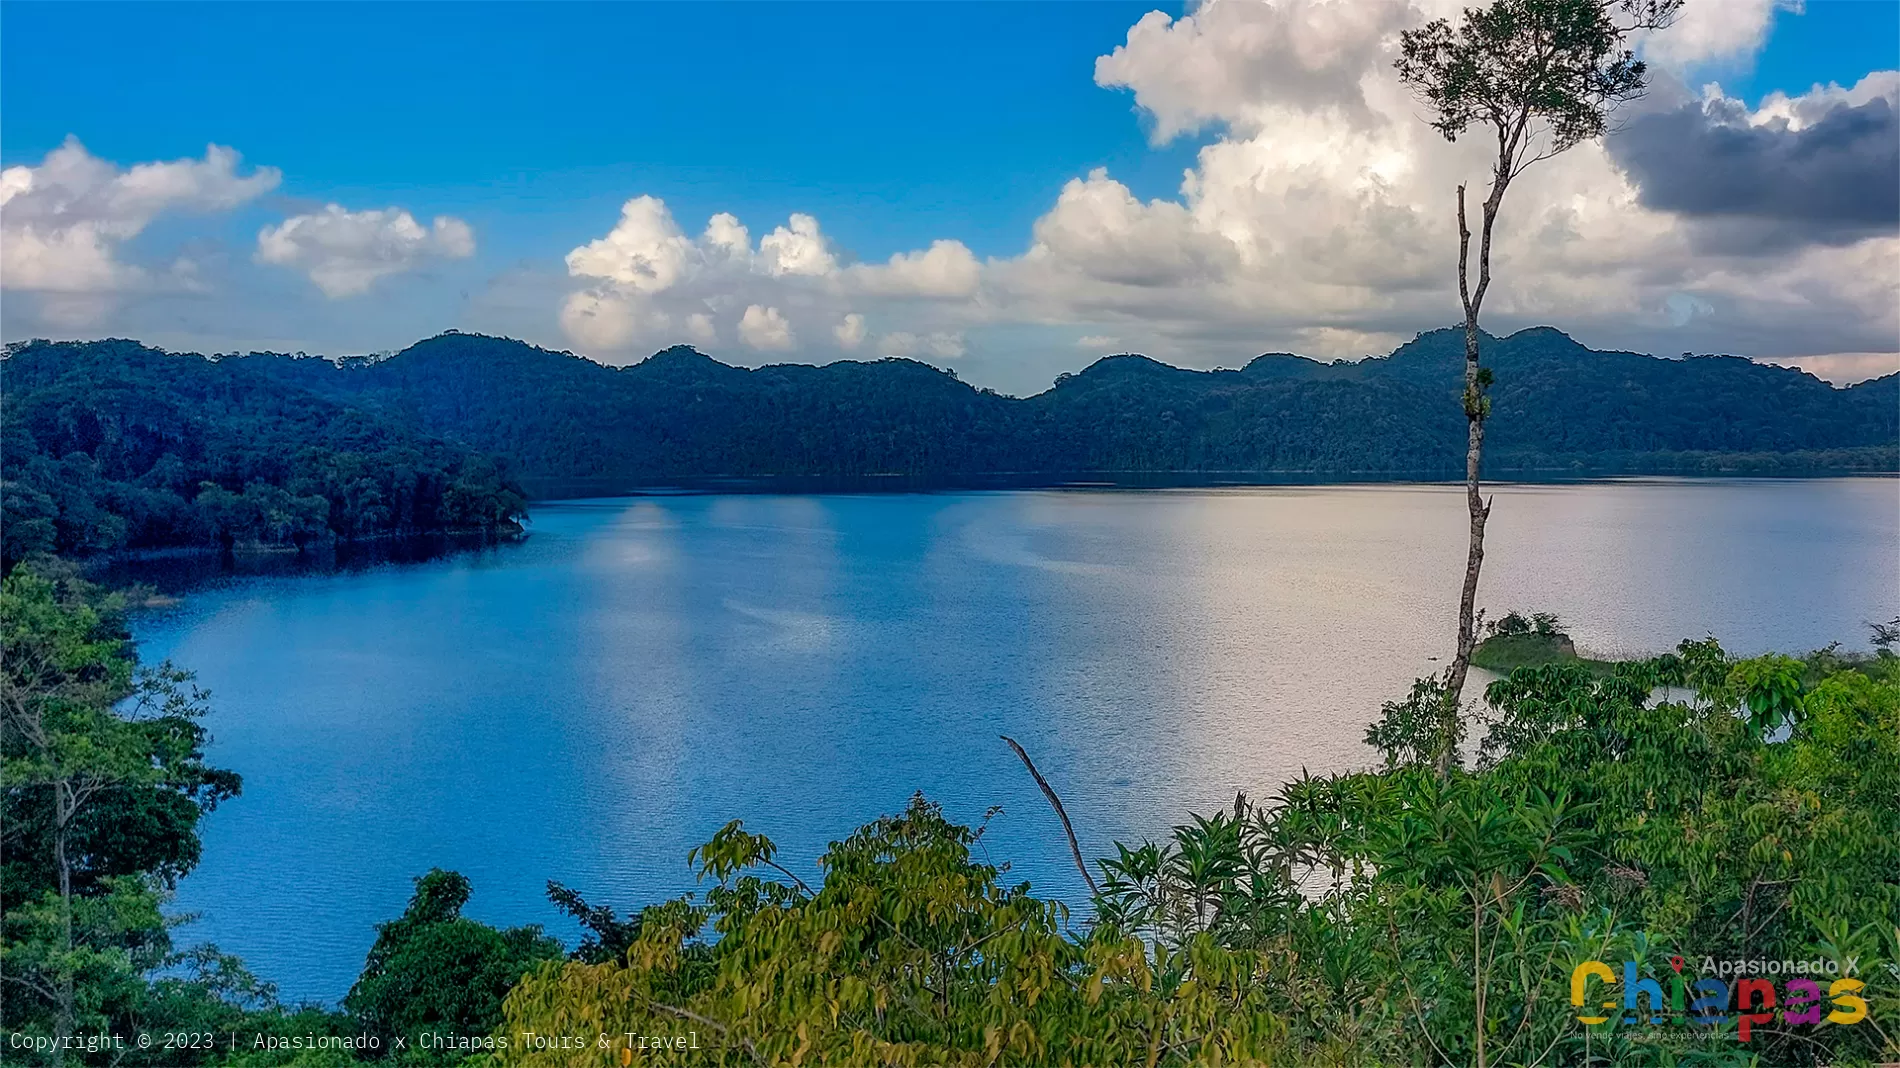 Descubriendo la Laguna Guinea en Chiapas